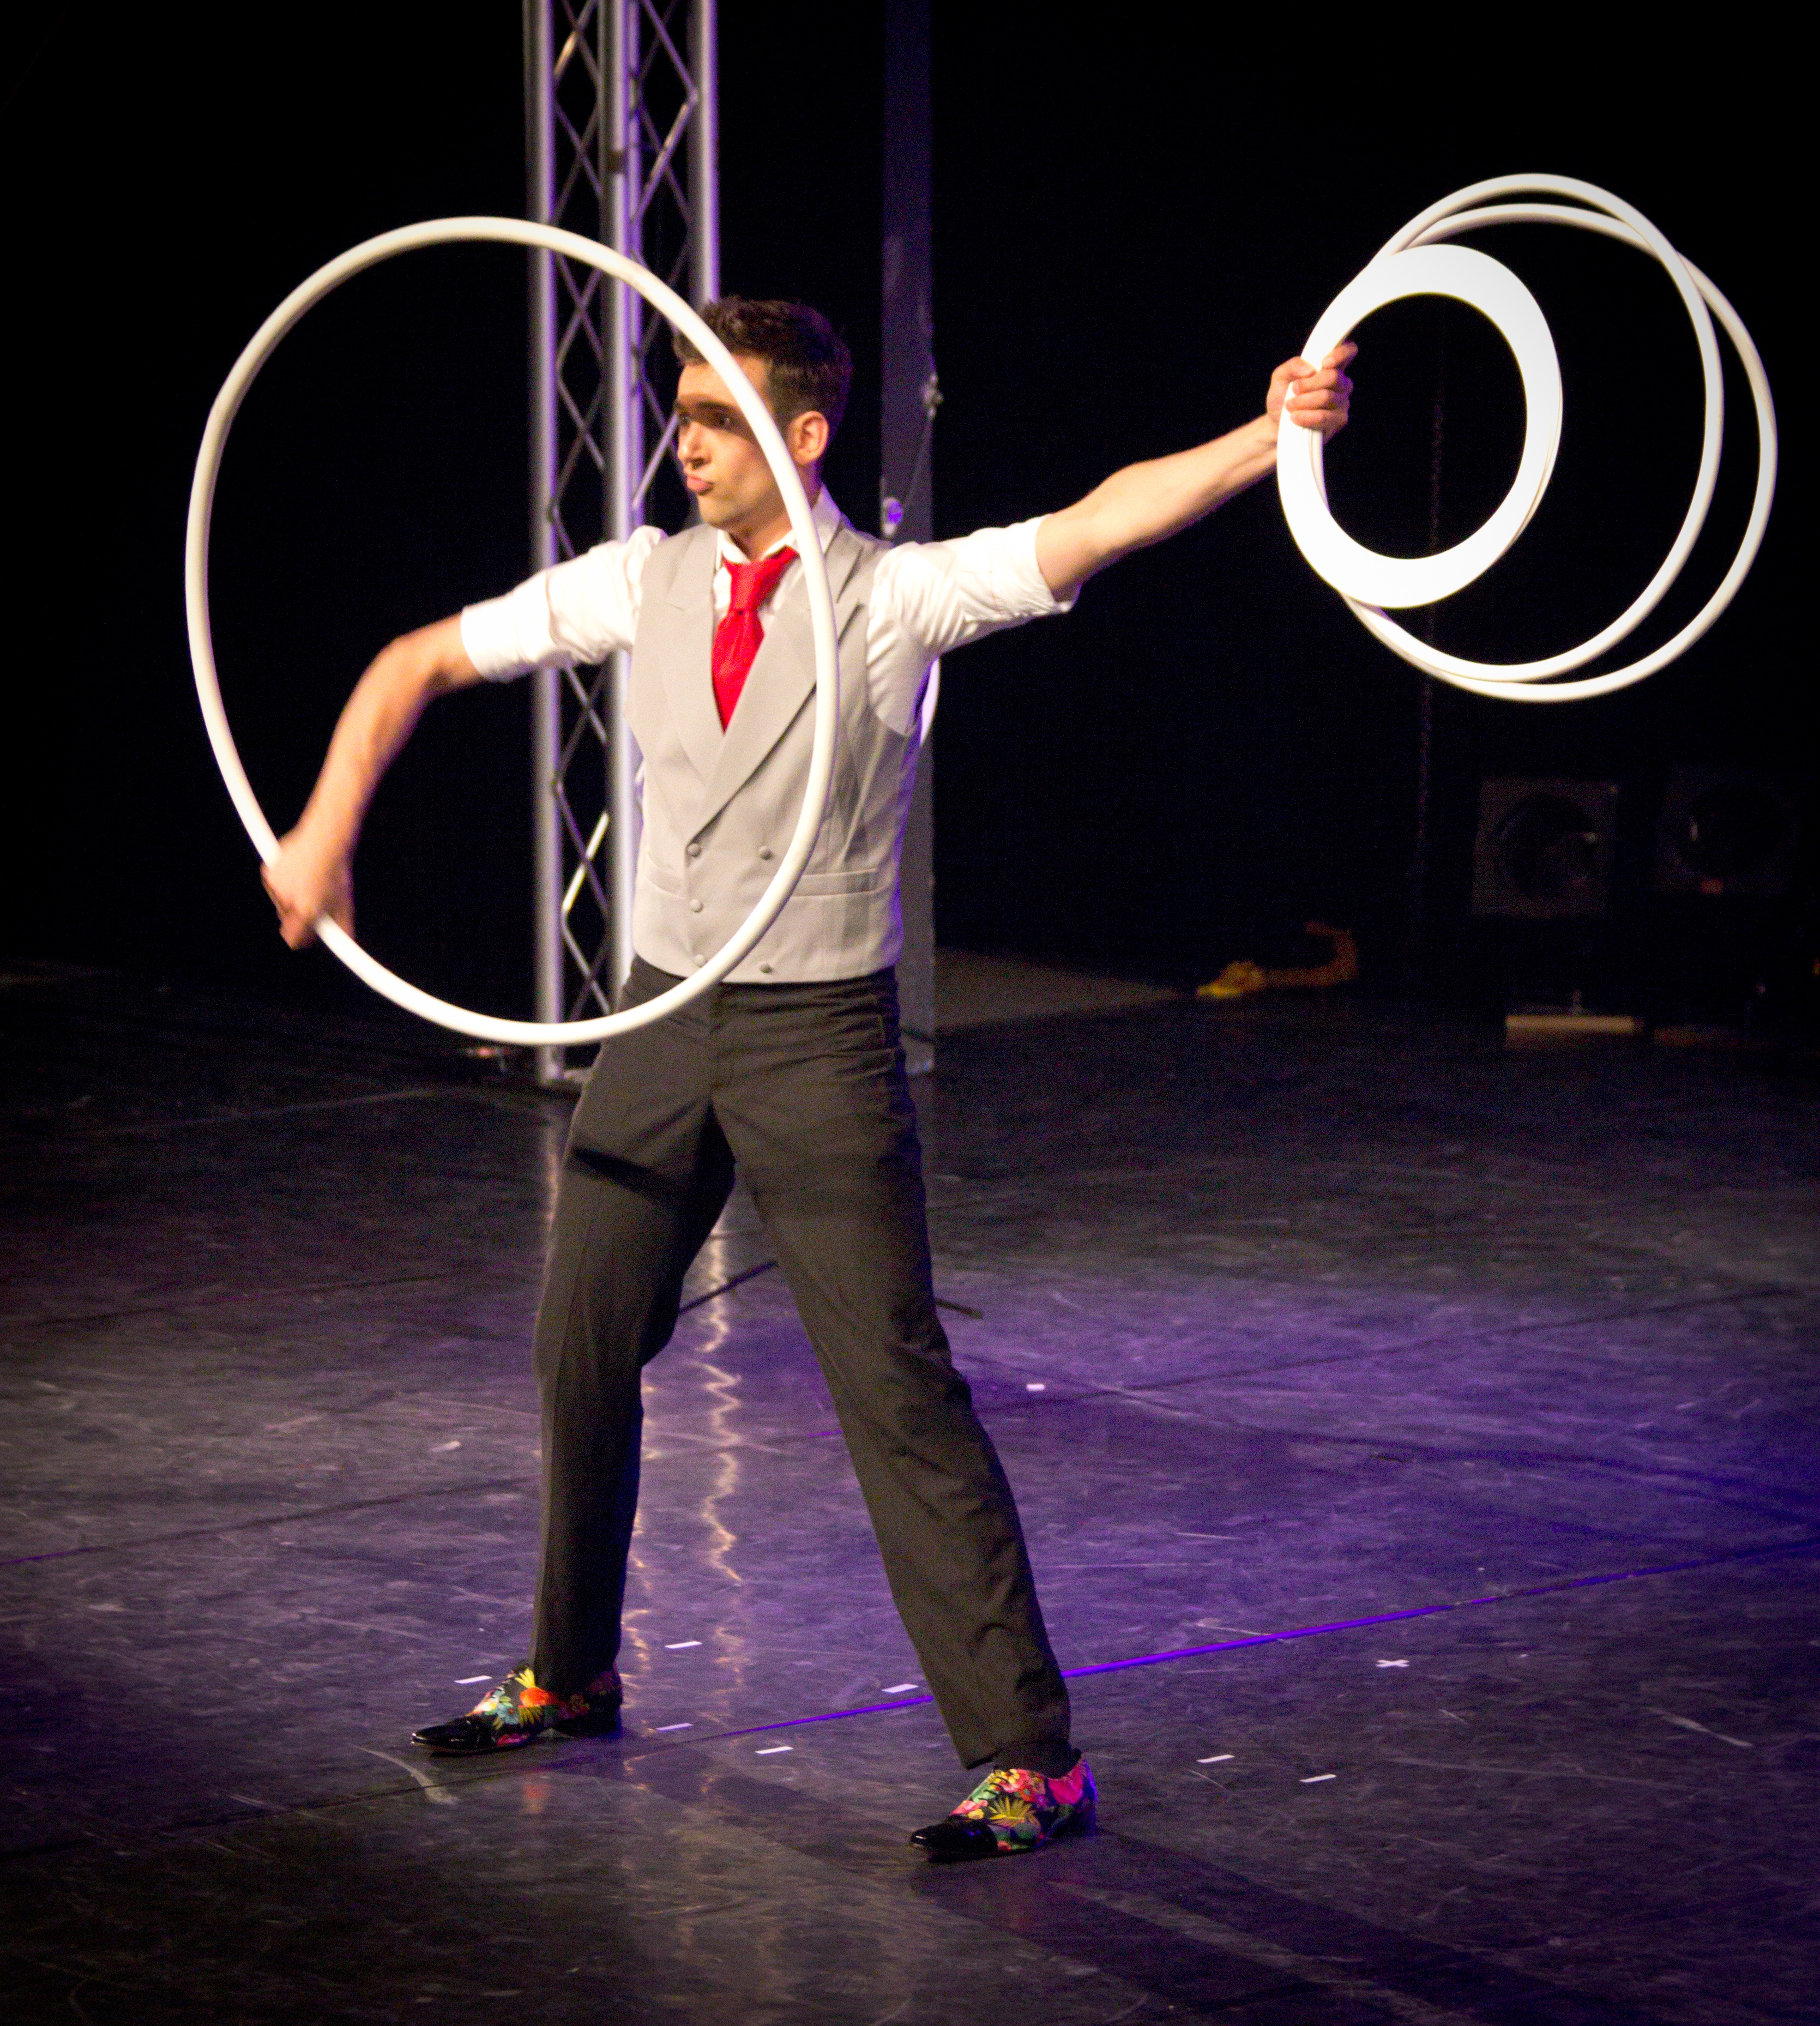 Juggling iz cool. Майкл мошен жонглер. Тони Дункан жонглер. Жонглер в цирке. Костюм жонглера.